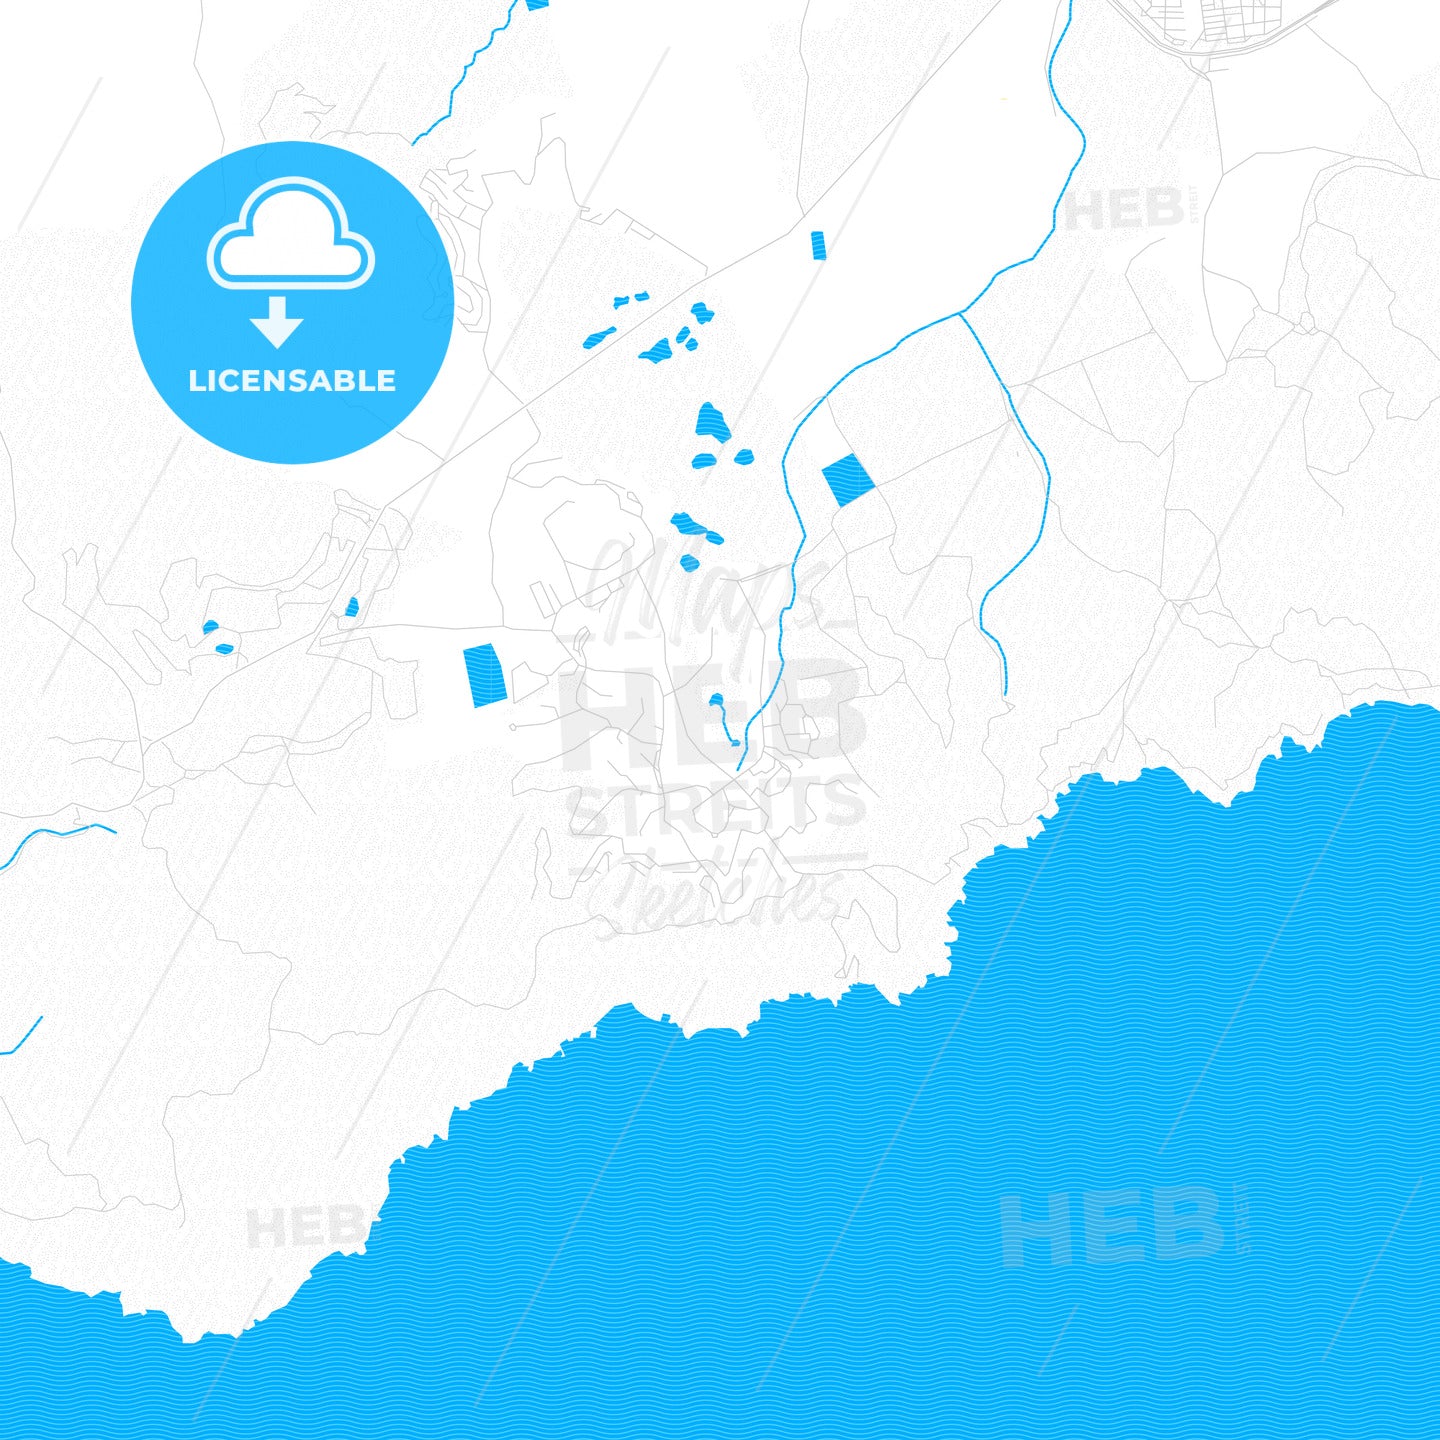 Atamaría, Spain PDF vector map with water in focus